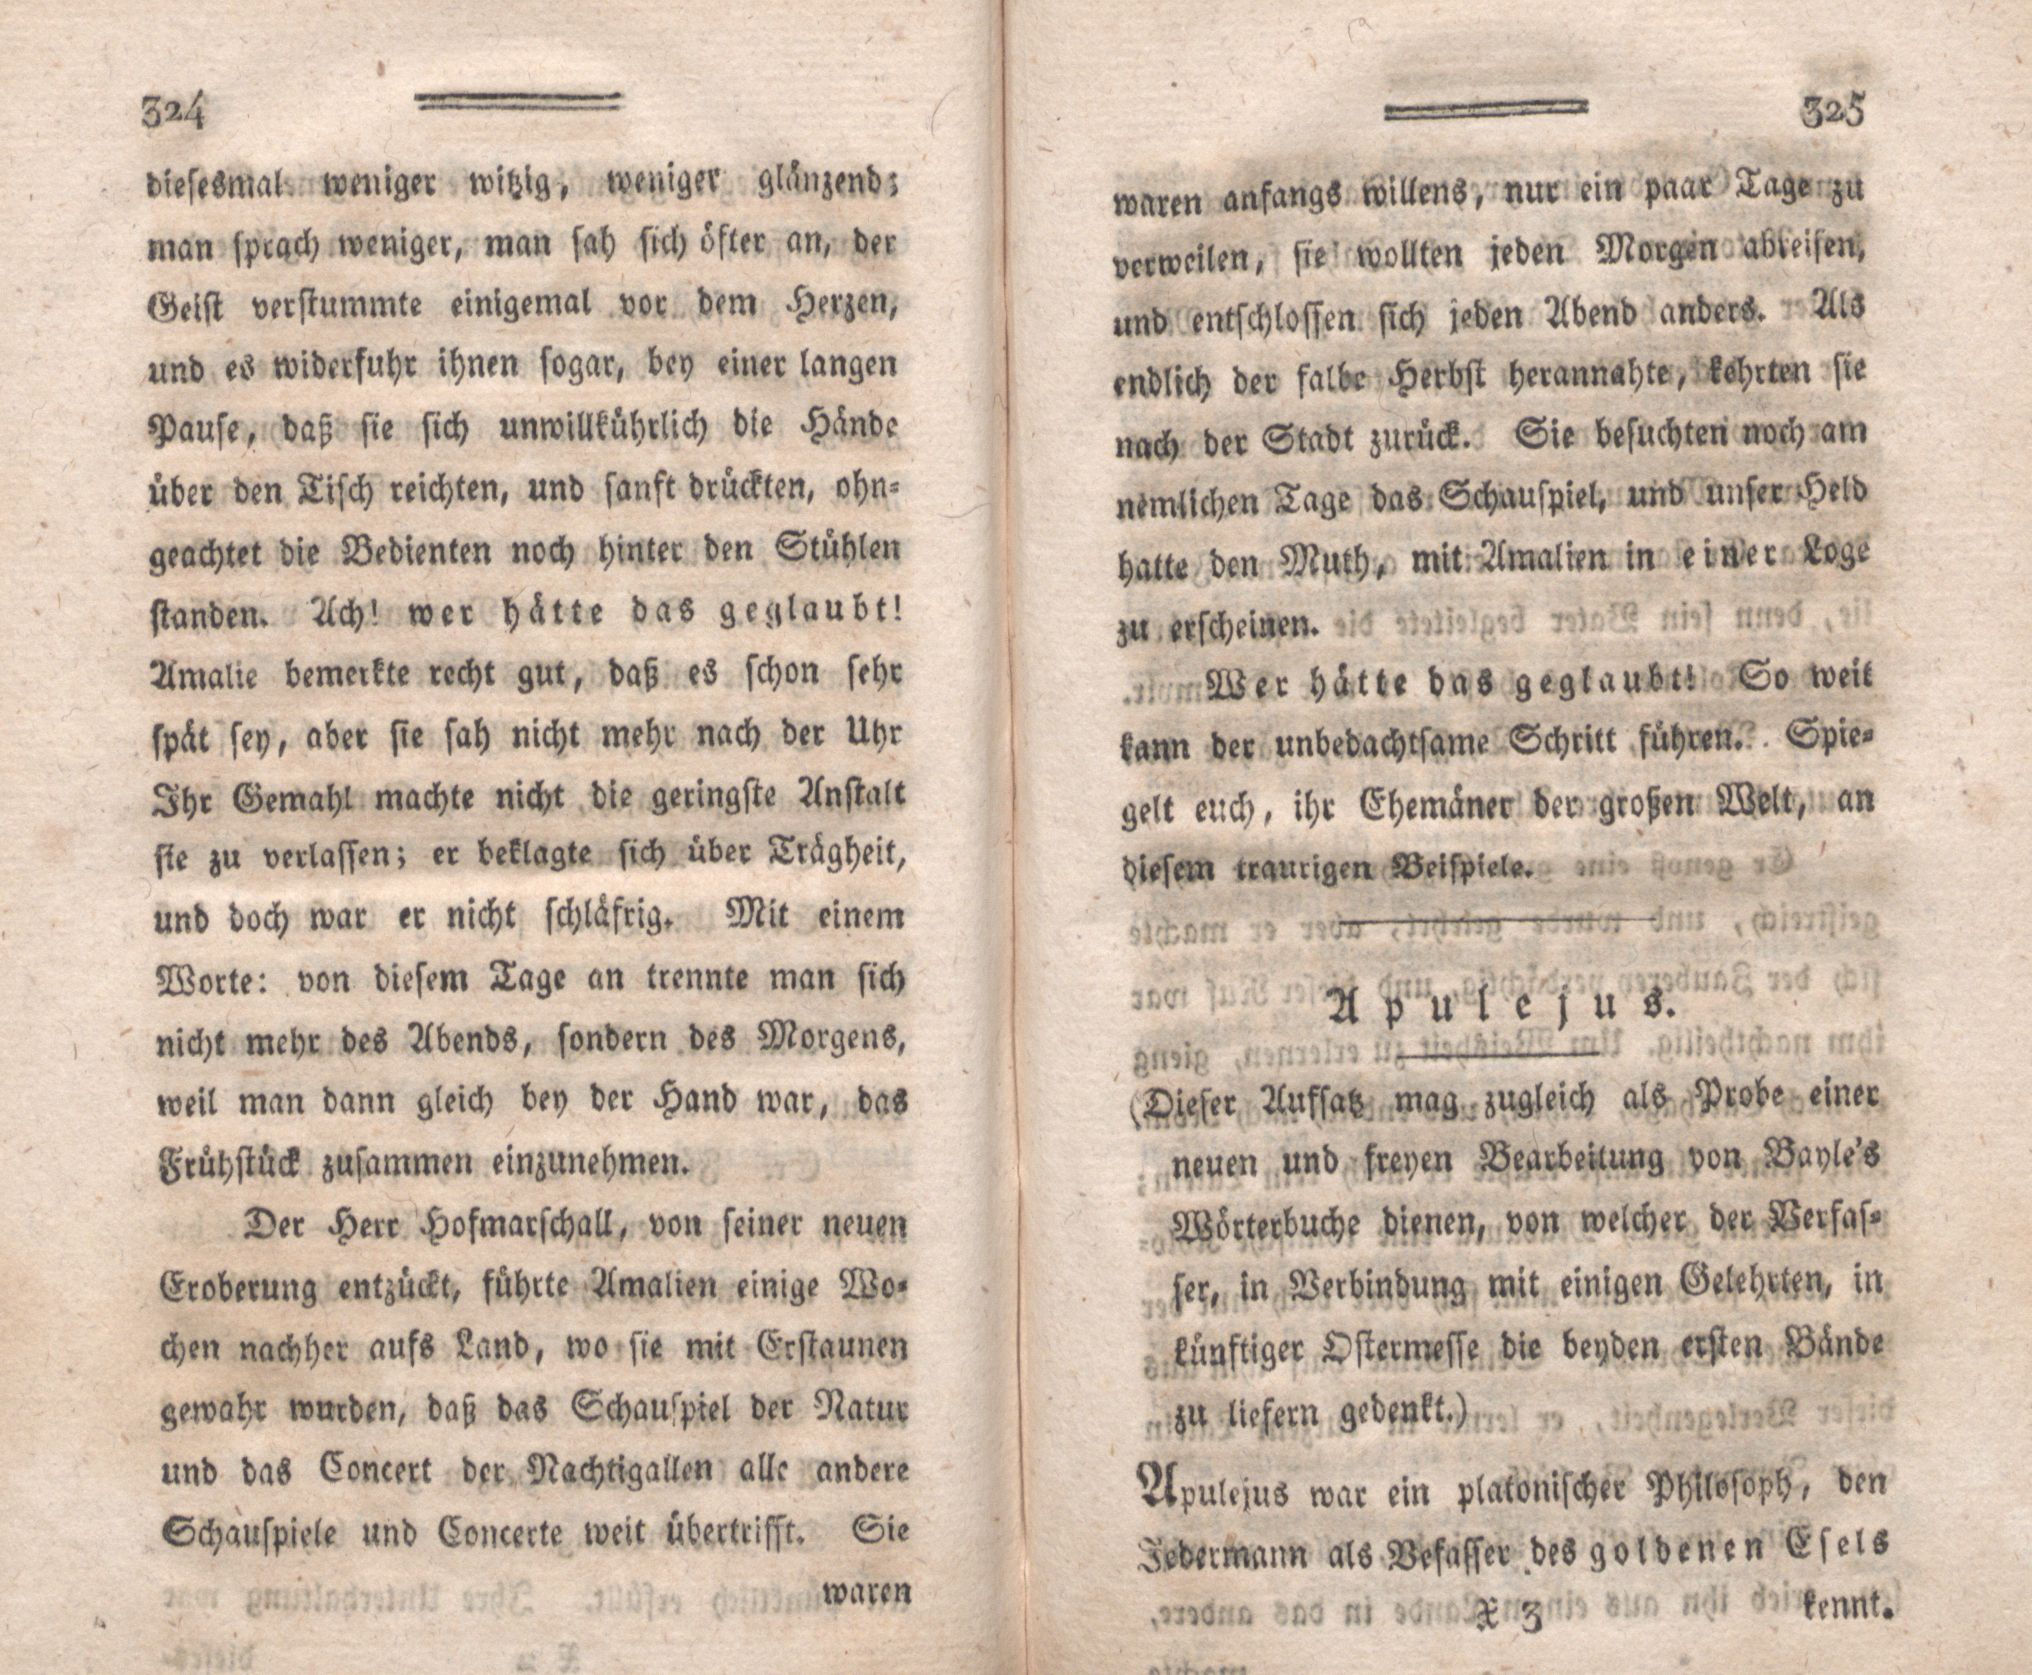 Apulejus (1794) | 1. (324-325) Main body of text